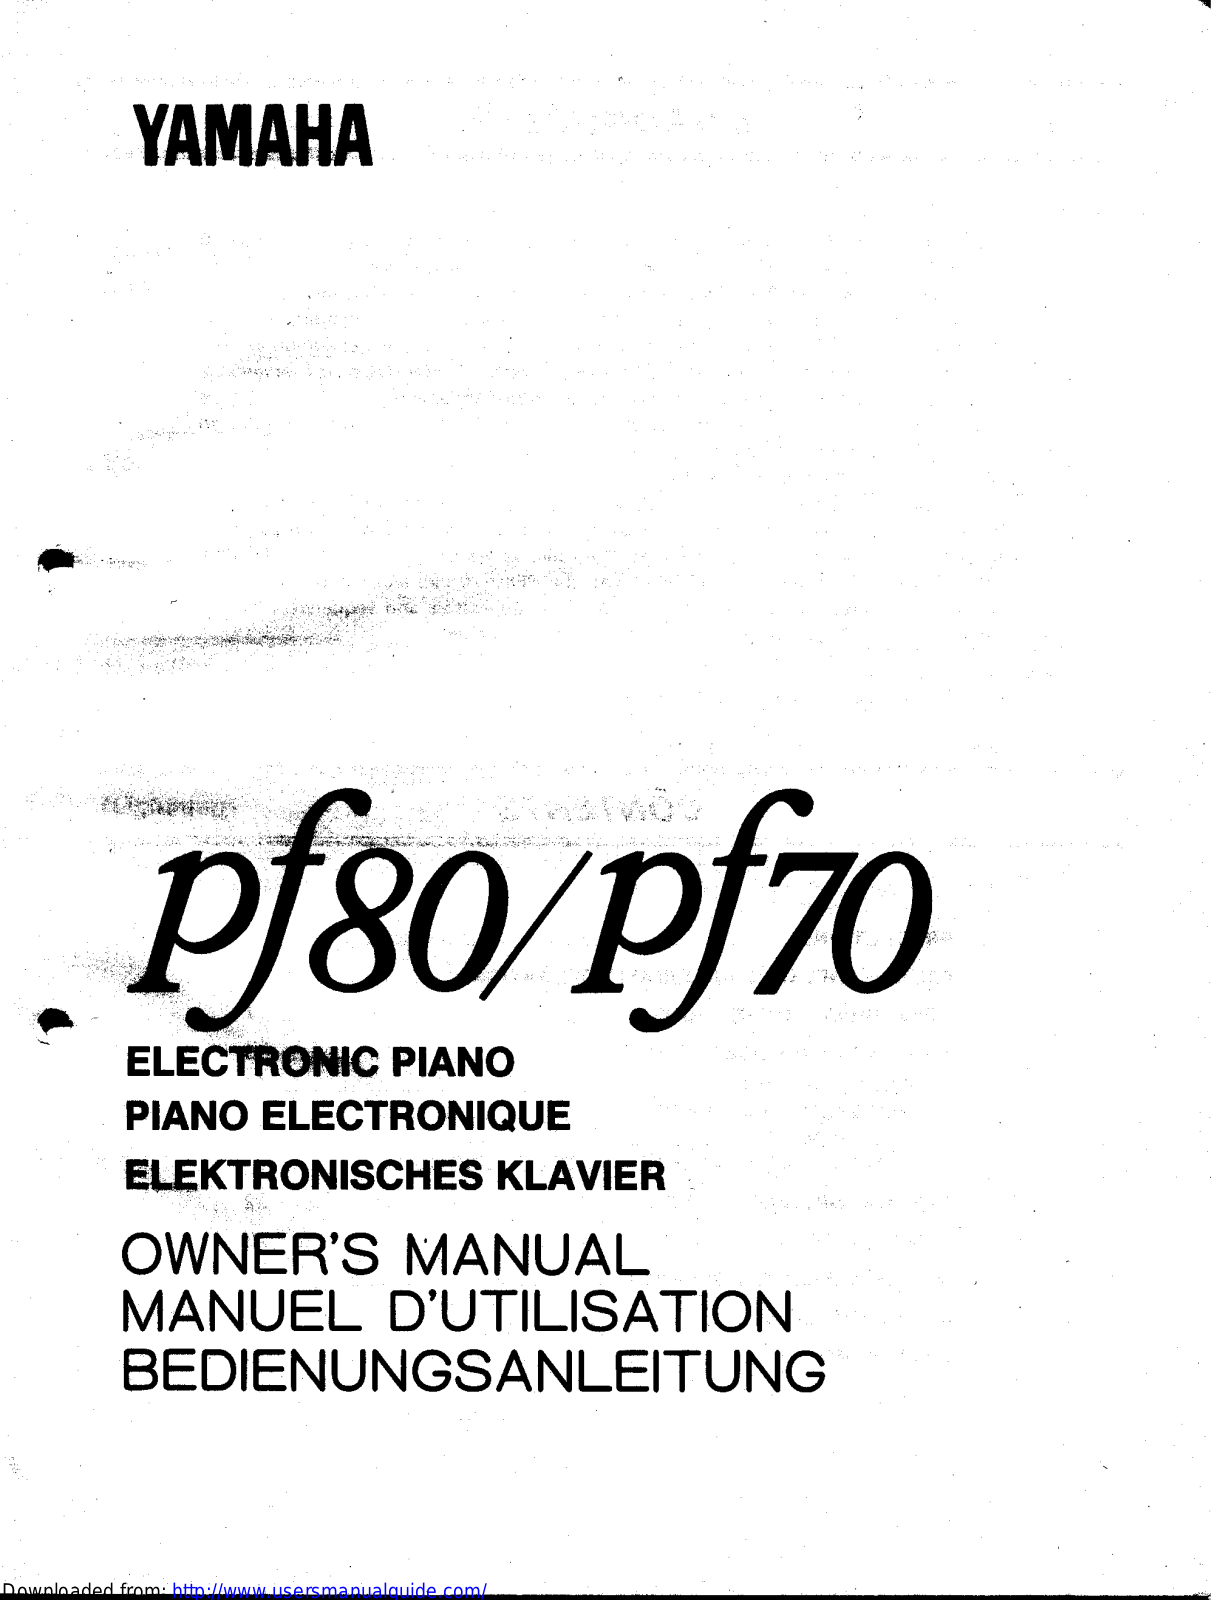 Yamaha Audio pf80, pf70 User Manual